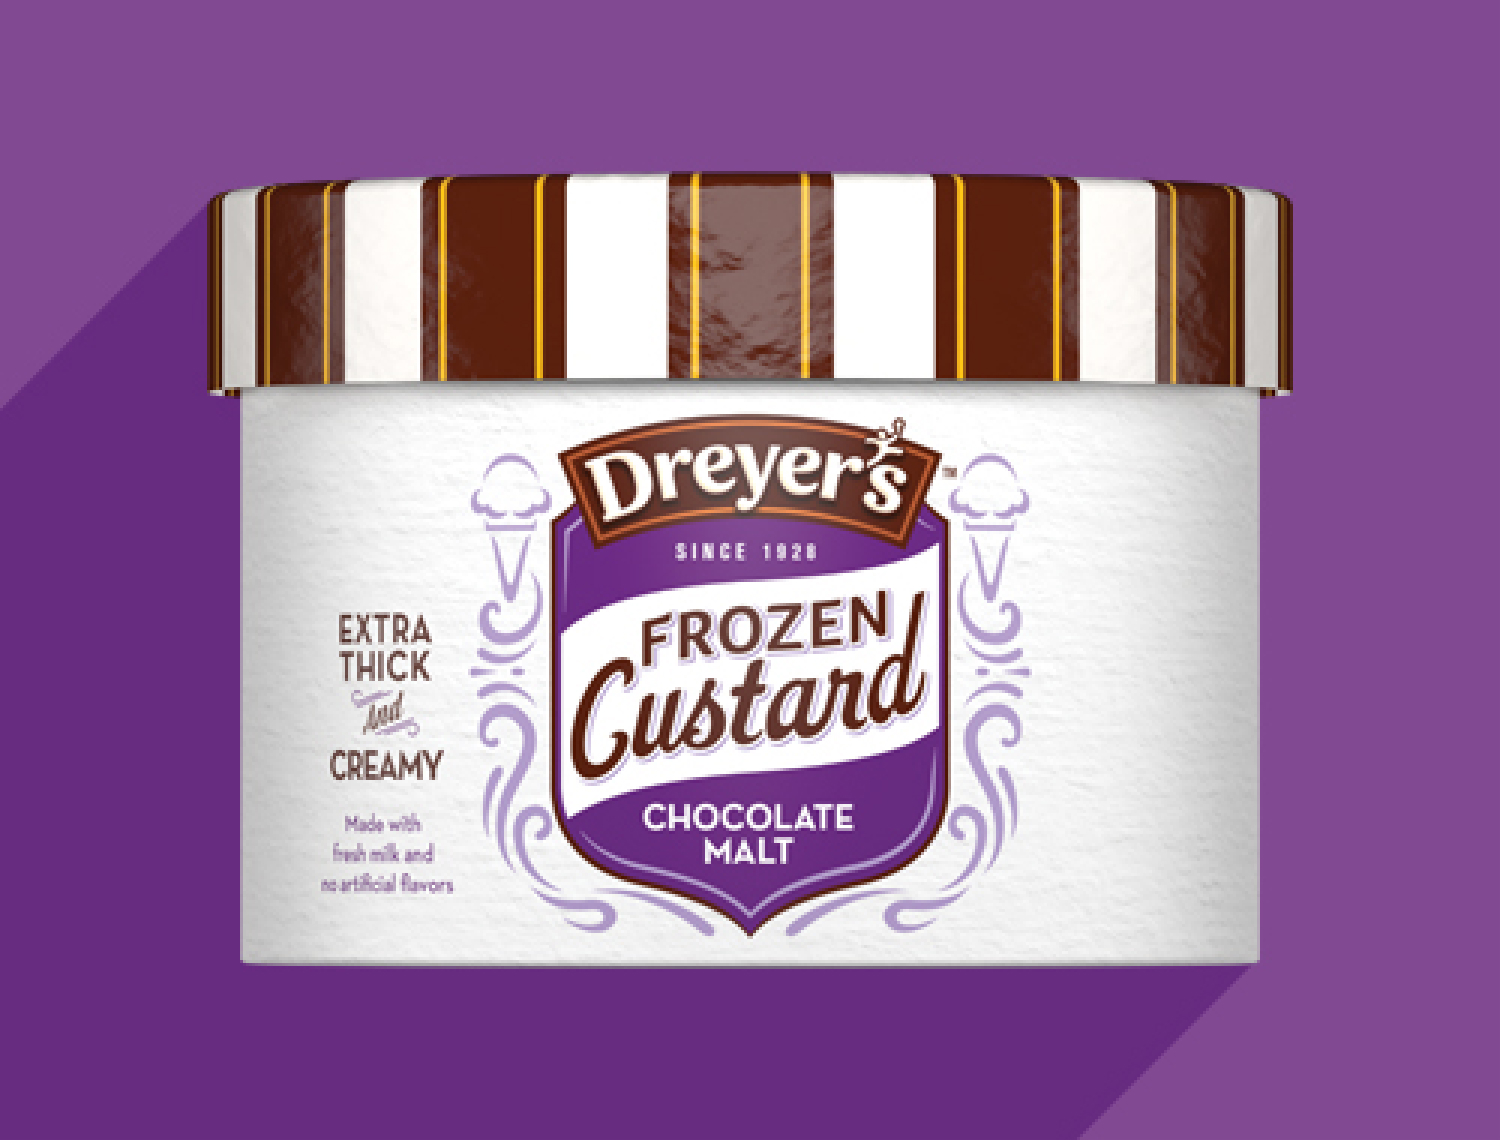 Carton of Dreyer's frozen custard chocolate malt from 2015